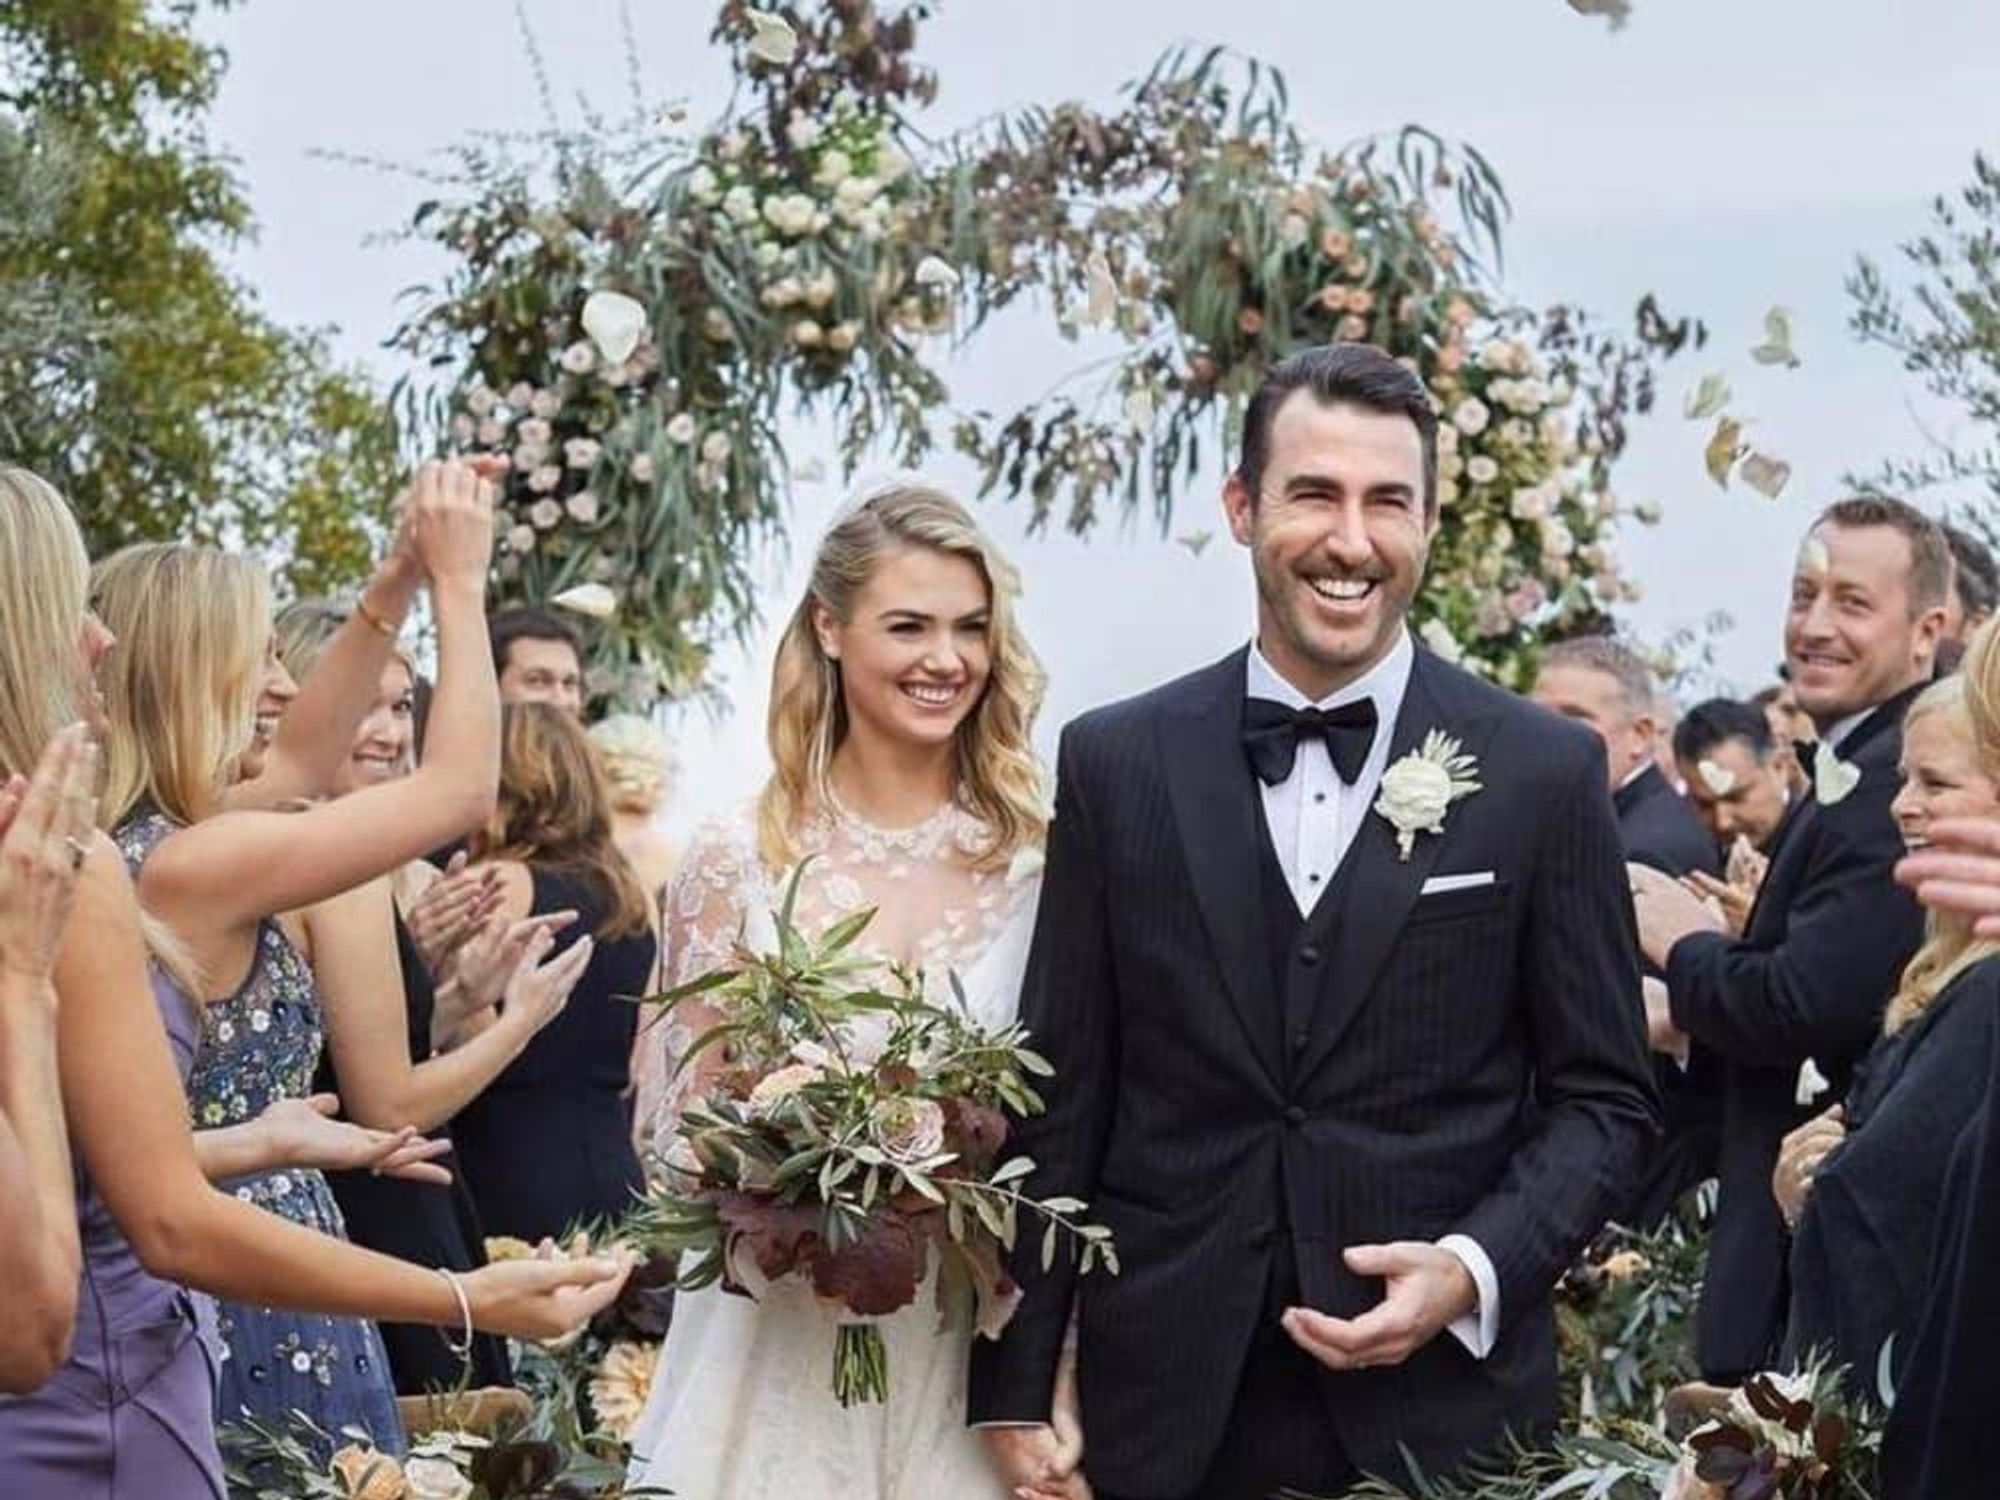 Kate Upton marries Justin Verlander in lavish Italian wedding ceremony as  intimate details of her nuptials emerge - Mirror Online